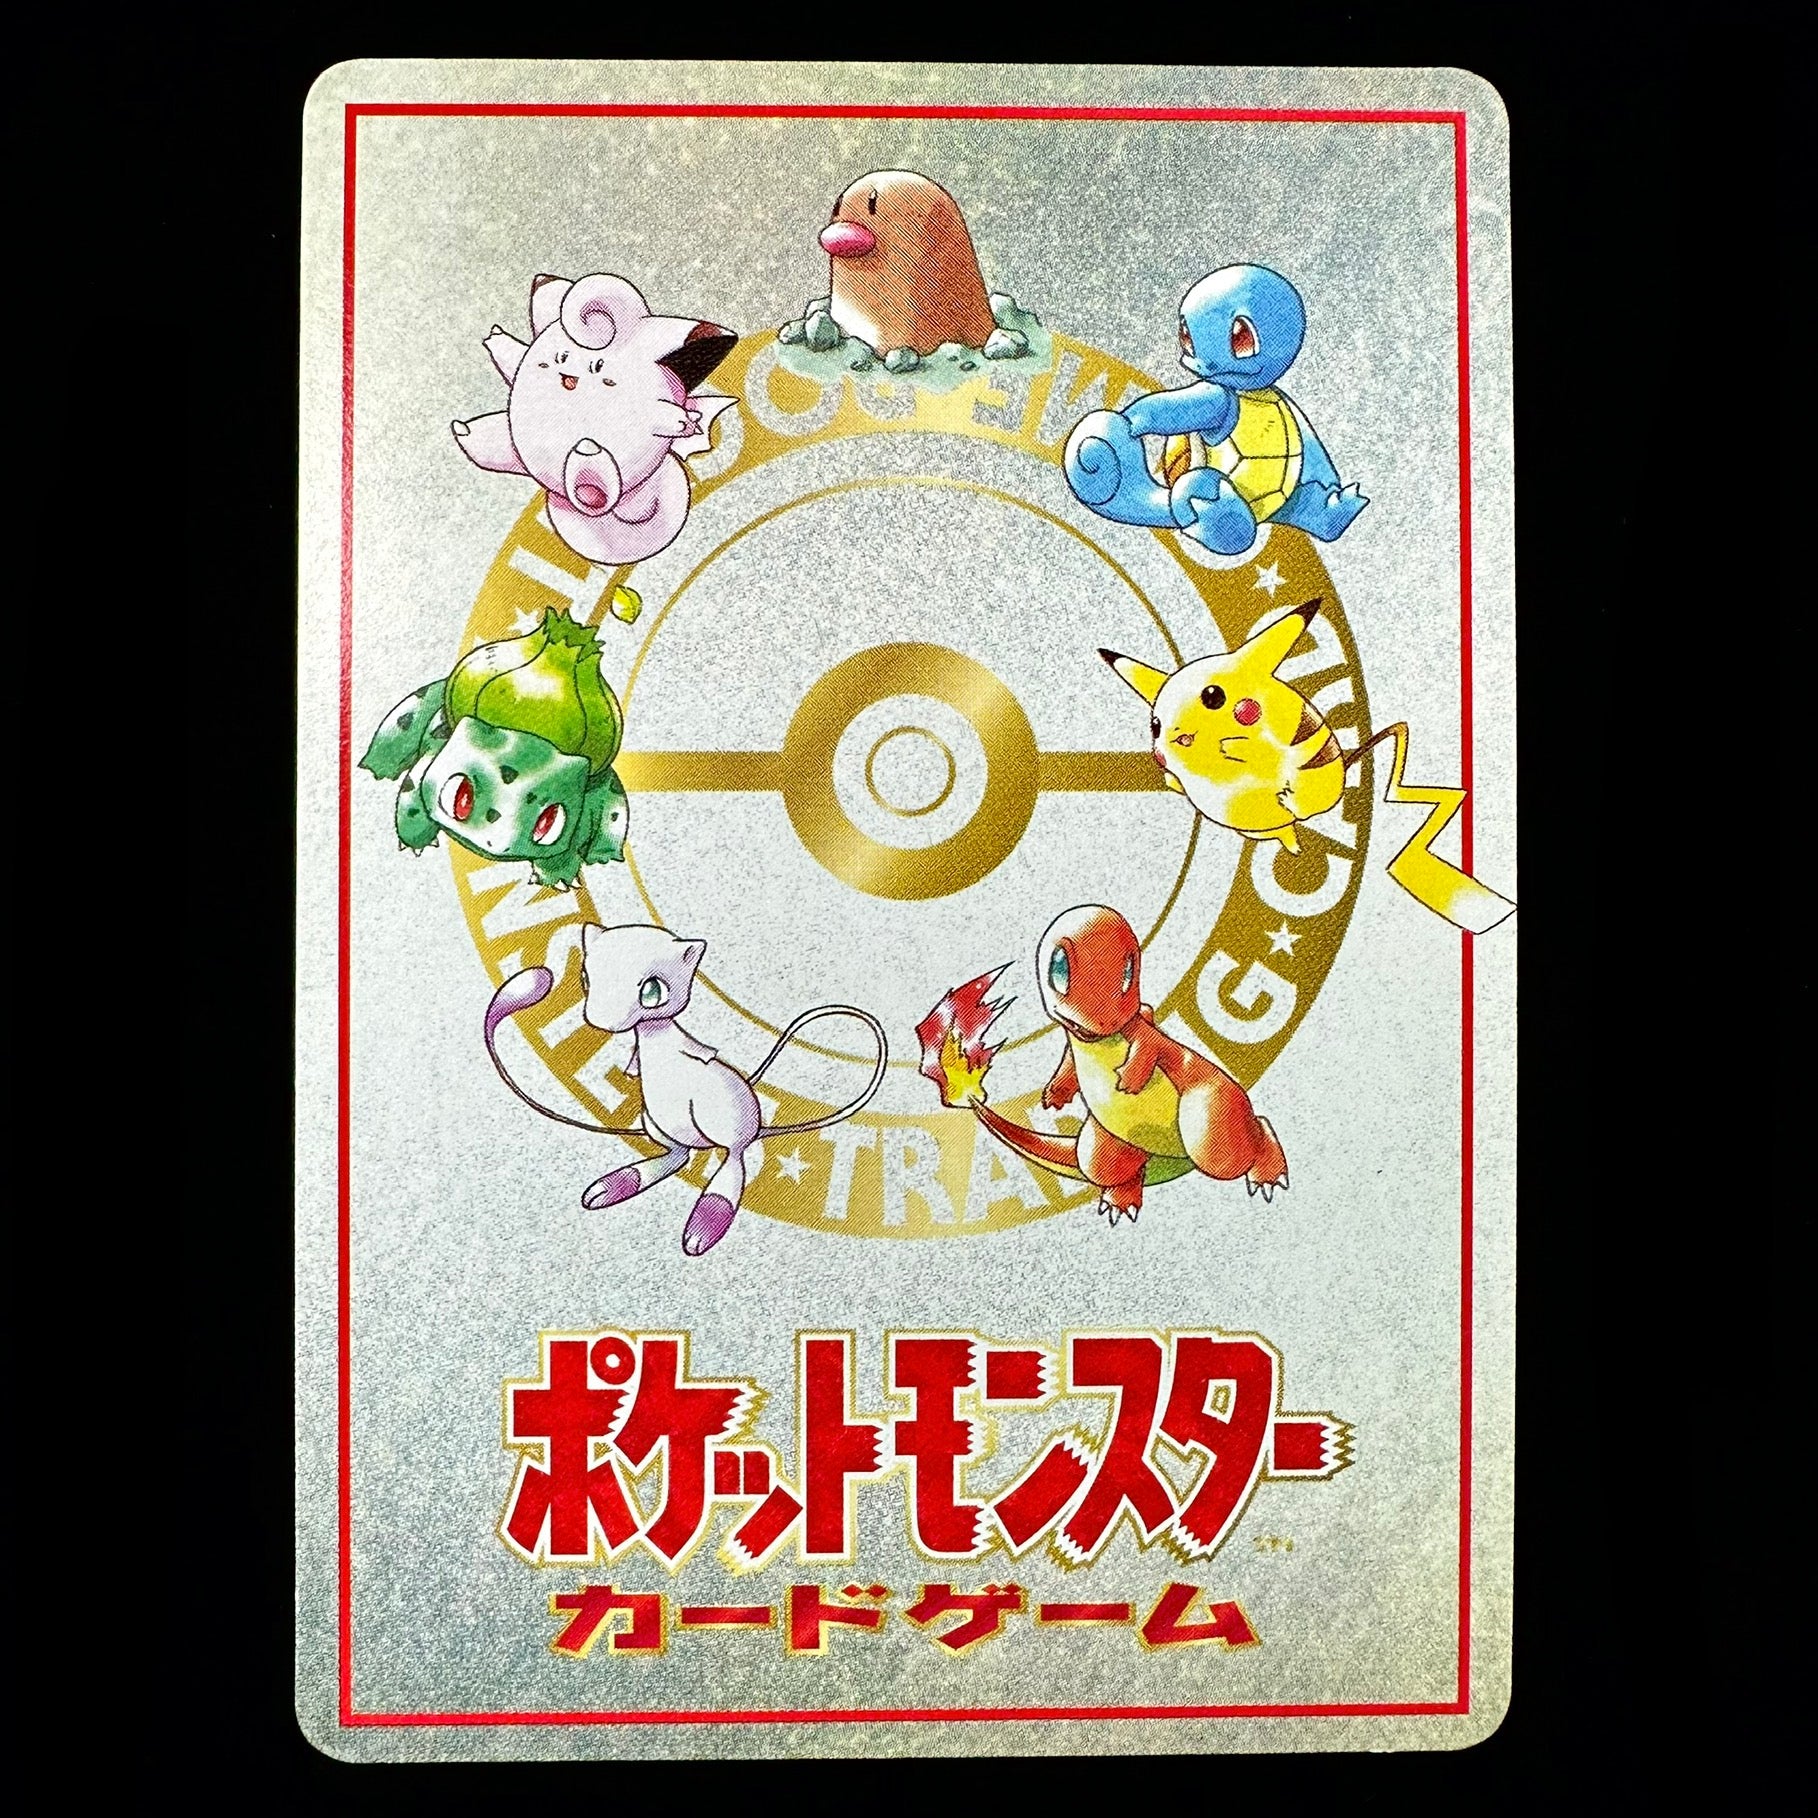 Pokémon Card Game "EXTRA RULE" No.01